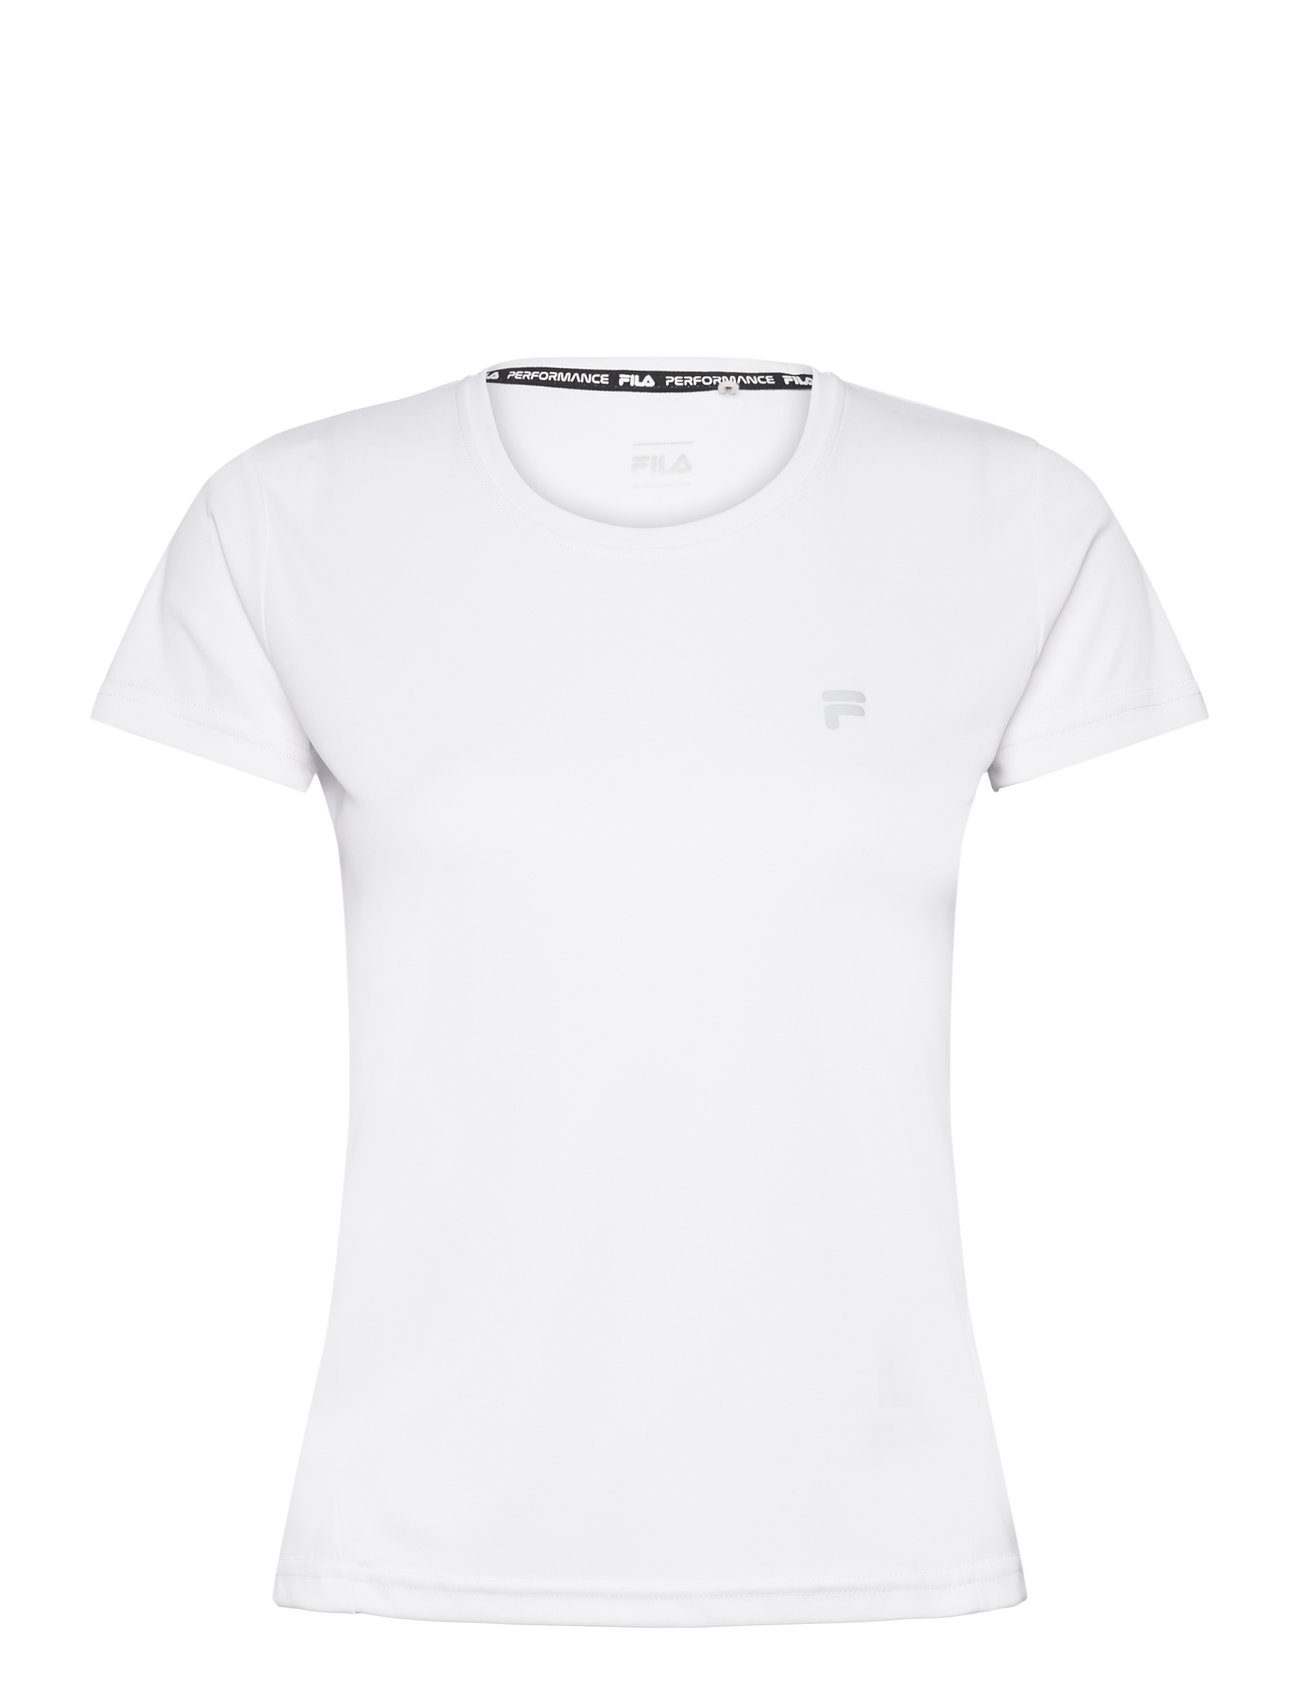 Ramatuelle Running Tee Tops T-shirts & Tops Short-sleeved White FILA